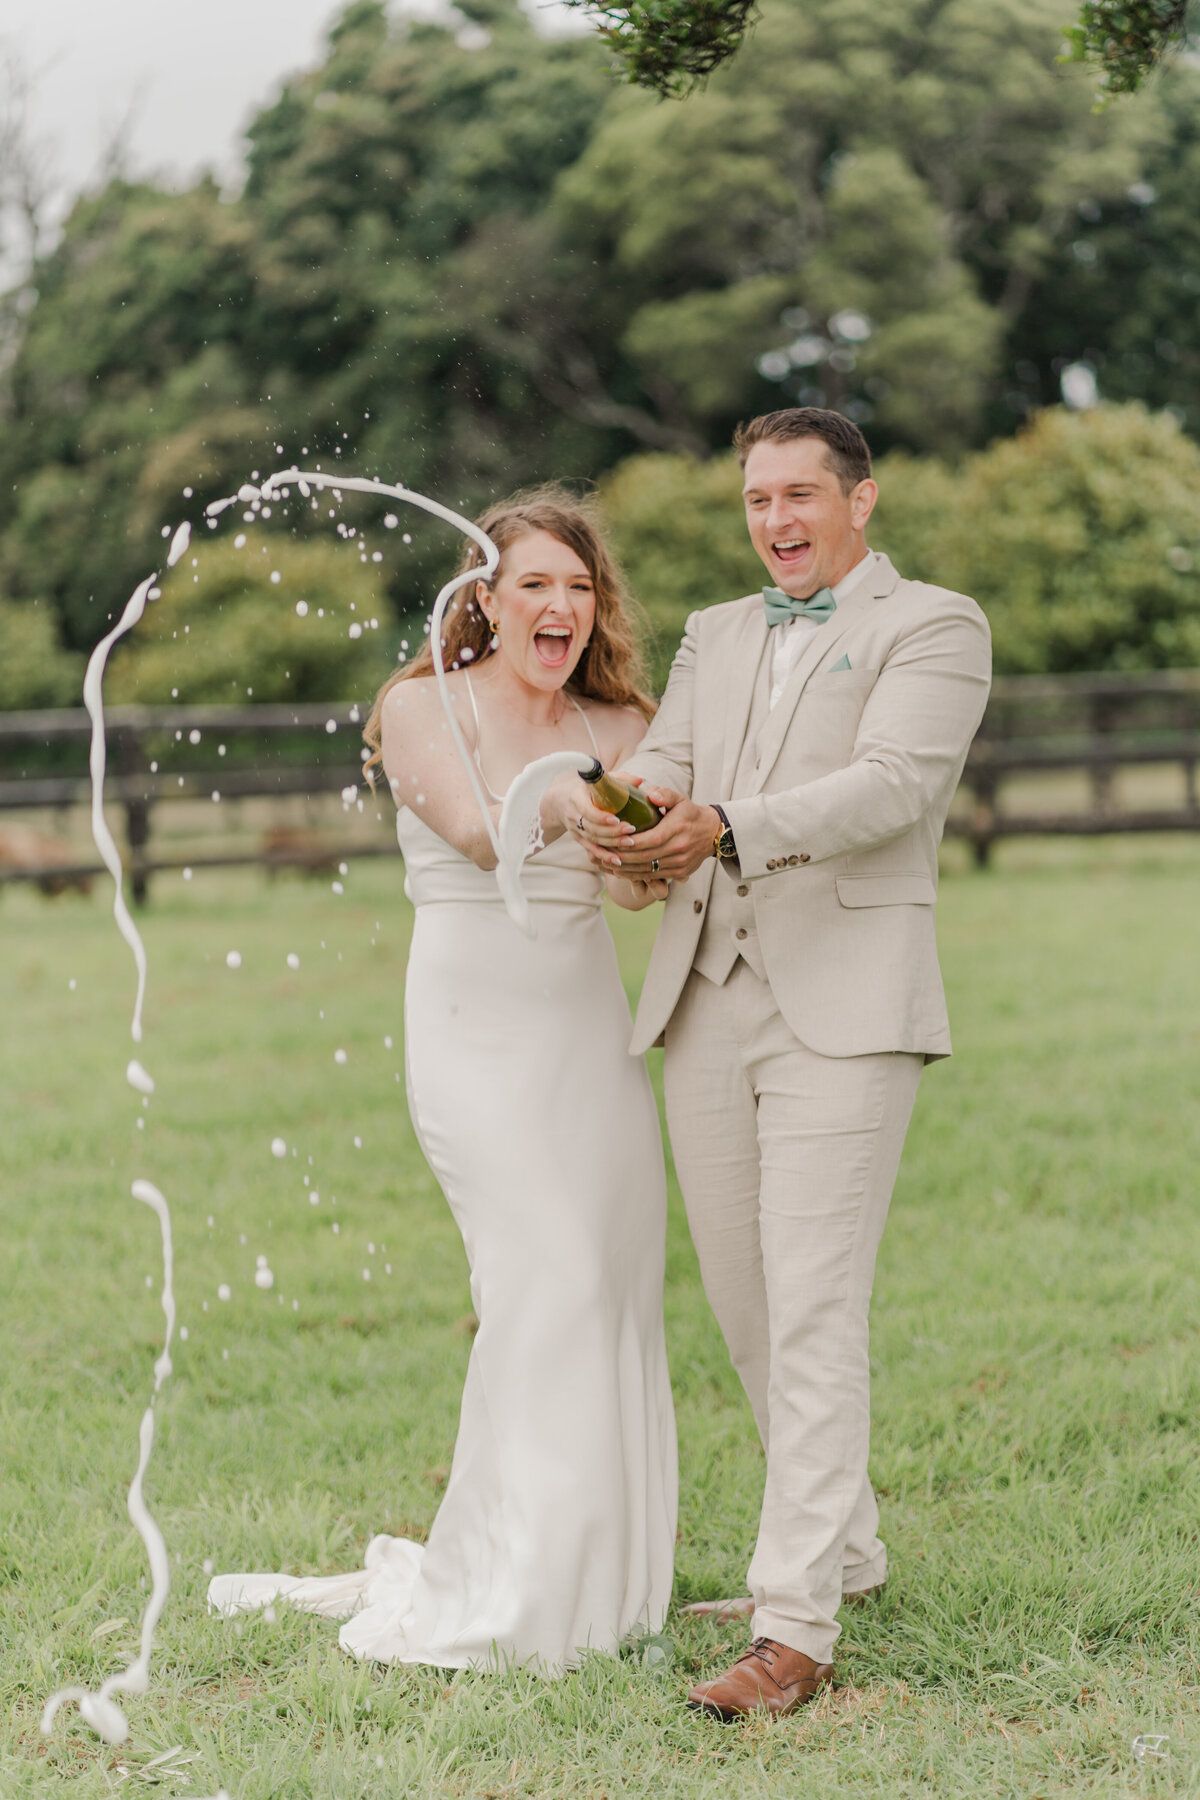 Best wedding photographer canberra